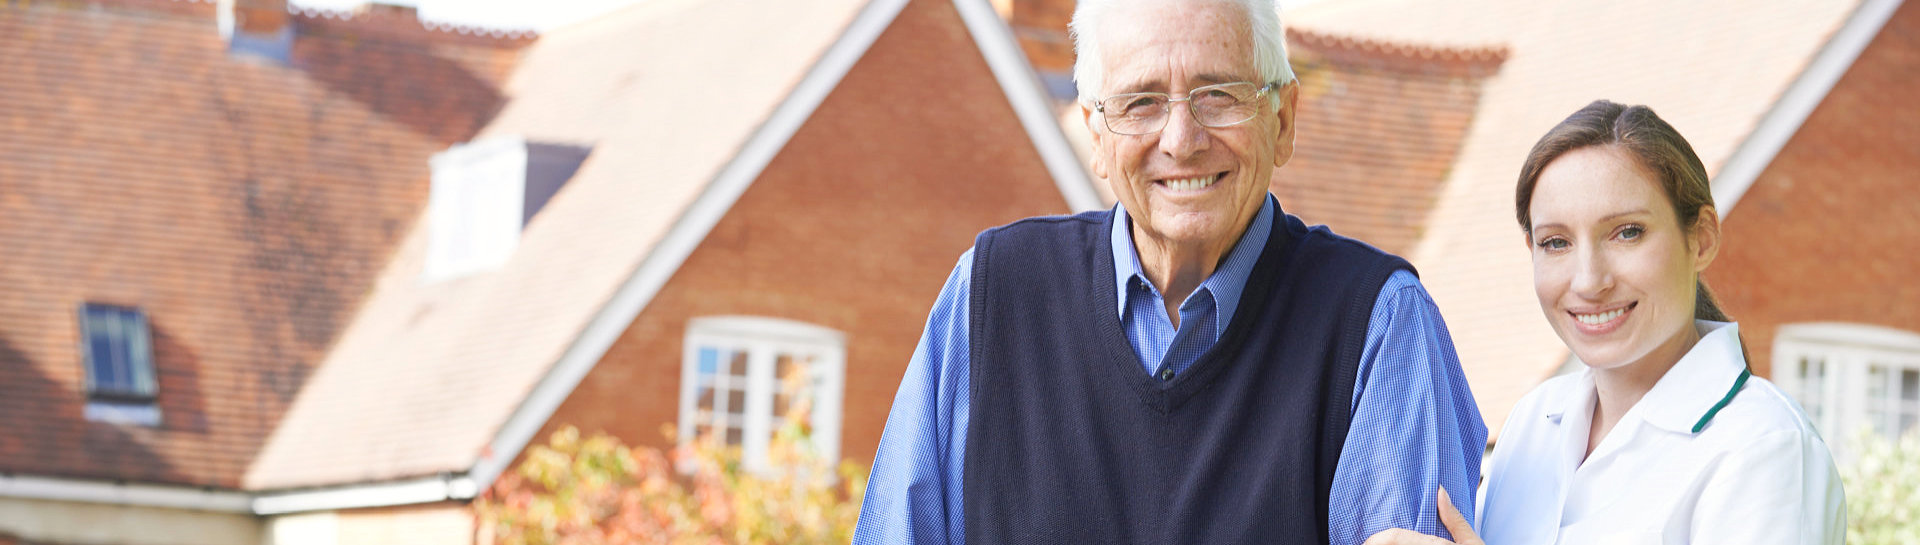 Caregiver helps senior man to walk in garden using walking frame